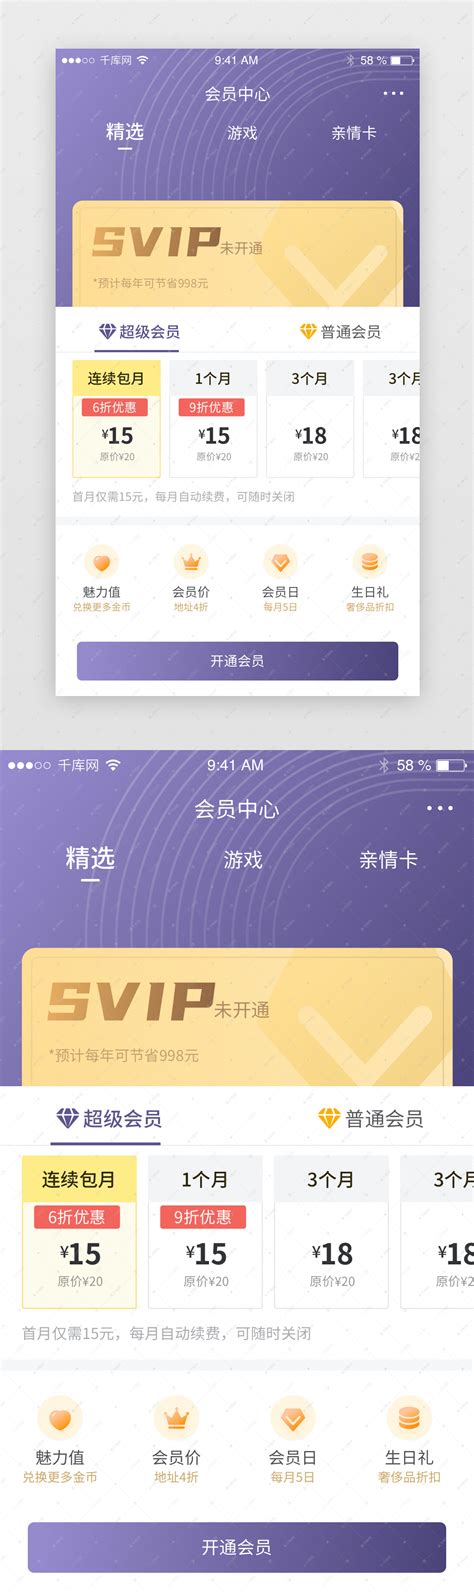 MY VIP app branding and design on Behance